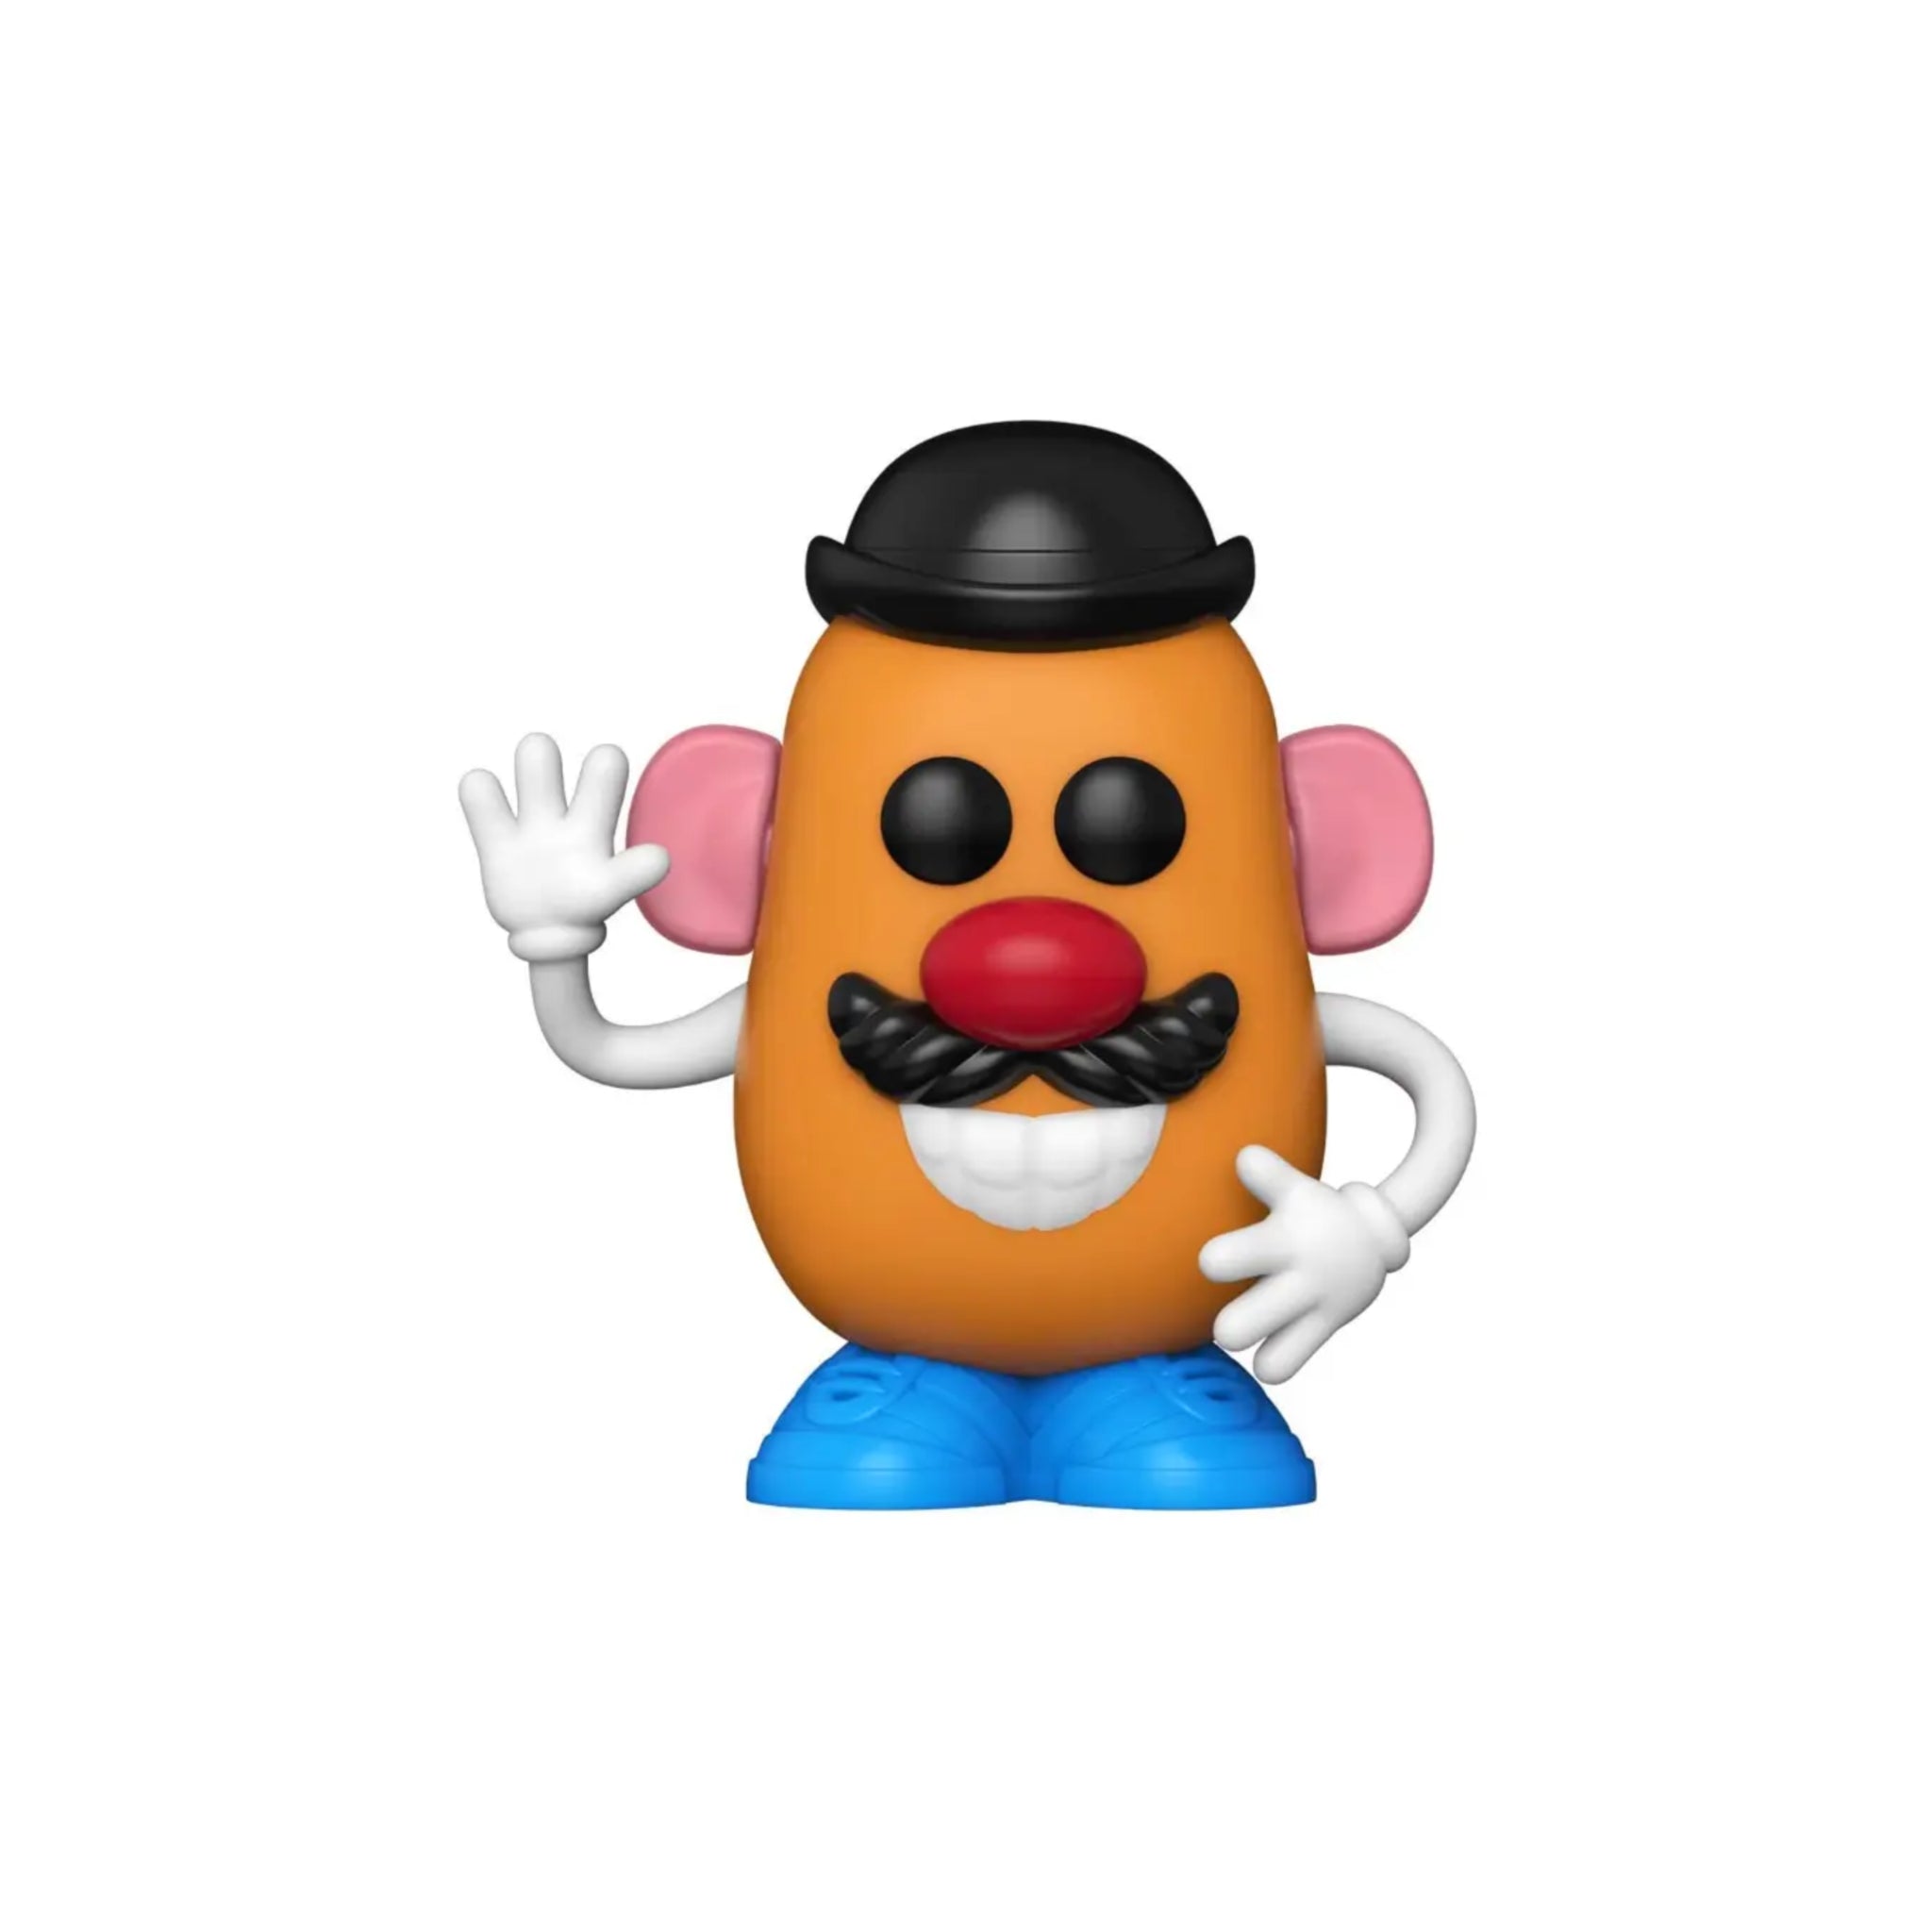 Mr. Potato Head Funko Pop!